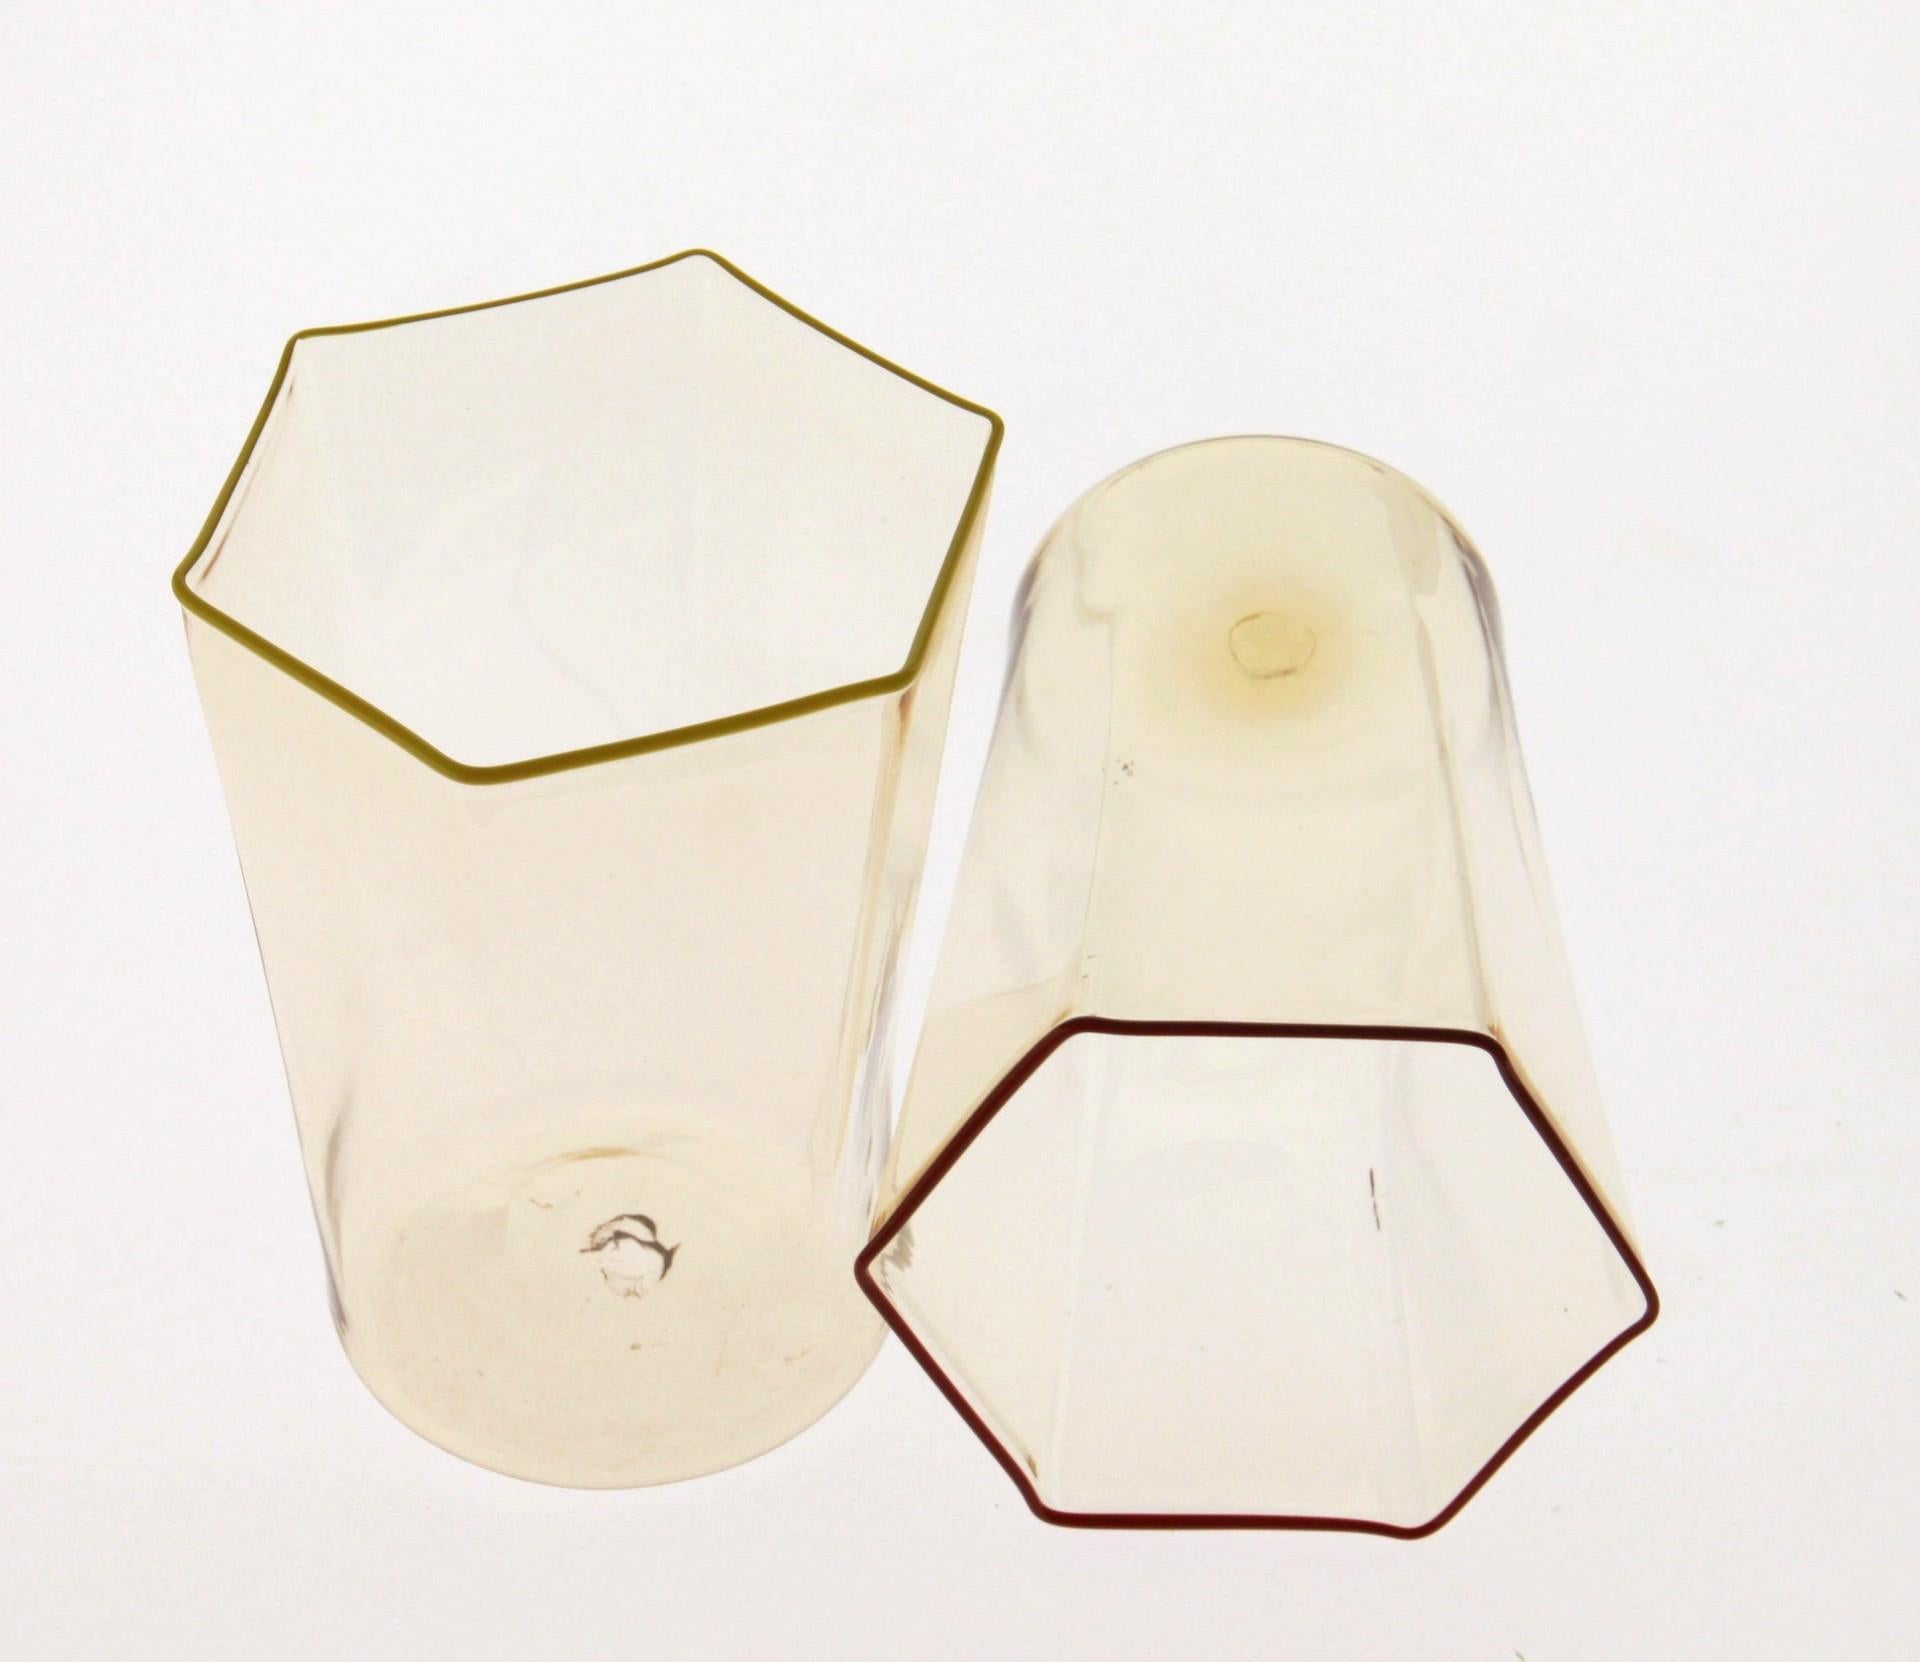 Six Hexagonal Pagliesco Glasses, Assorted Color Rim, Carlo Scarpa, 1932 Design 9